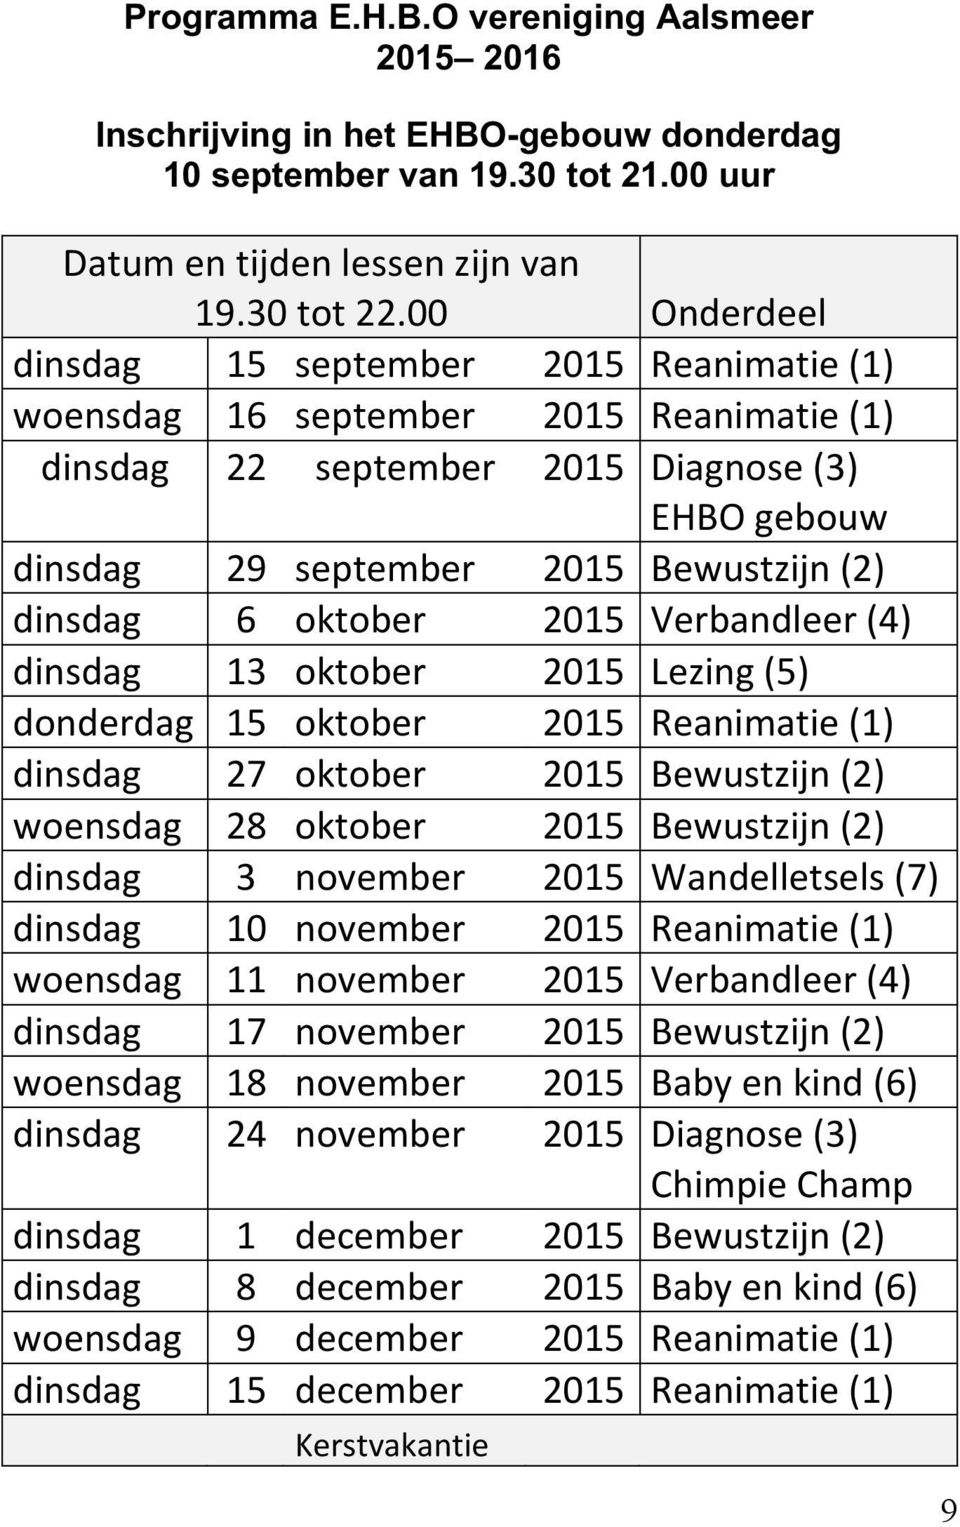 oktober 2015 Verbandleer (4) dinsdag 13 oktober 2015 Lezing (5) donderdag 15 oktober 2015 Reanimatie (1) dinsdag 27 oktober 2015 Bewustzijn (2) woensdag 28 oktober 2015 Bewustzijn (2) dinsdag 3